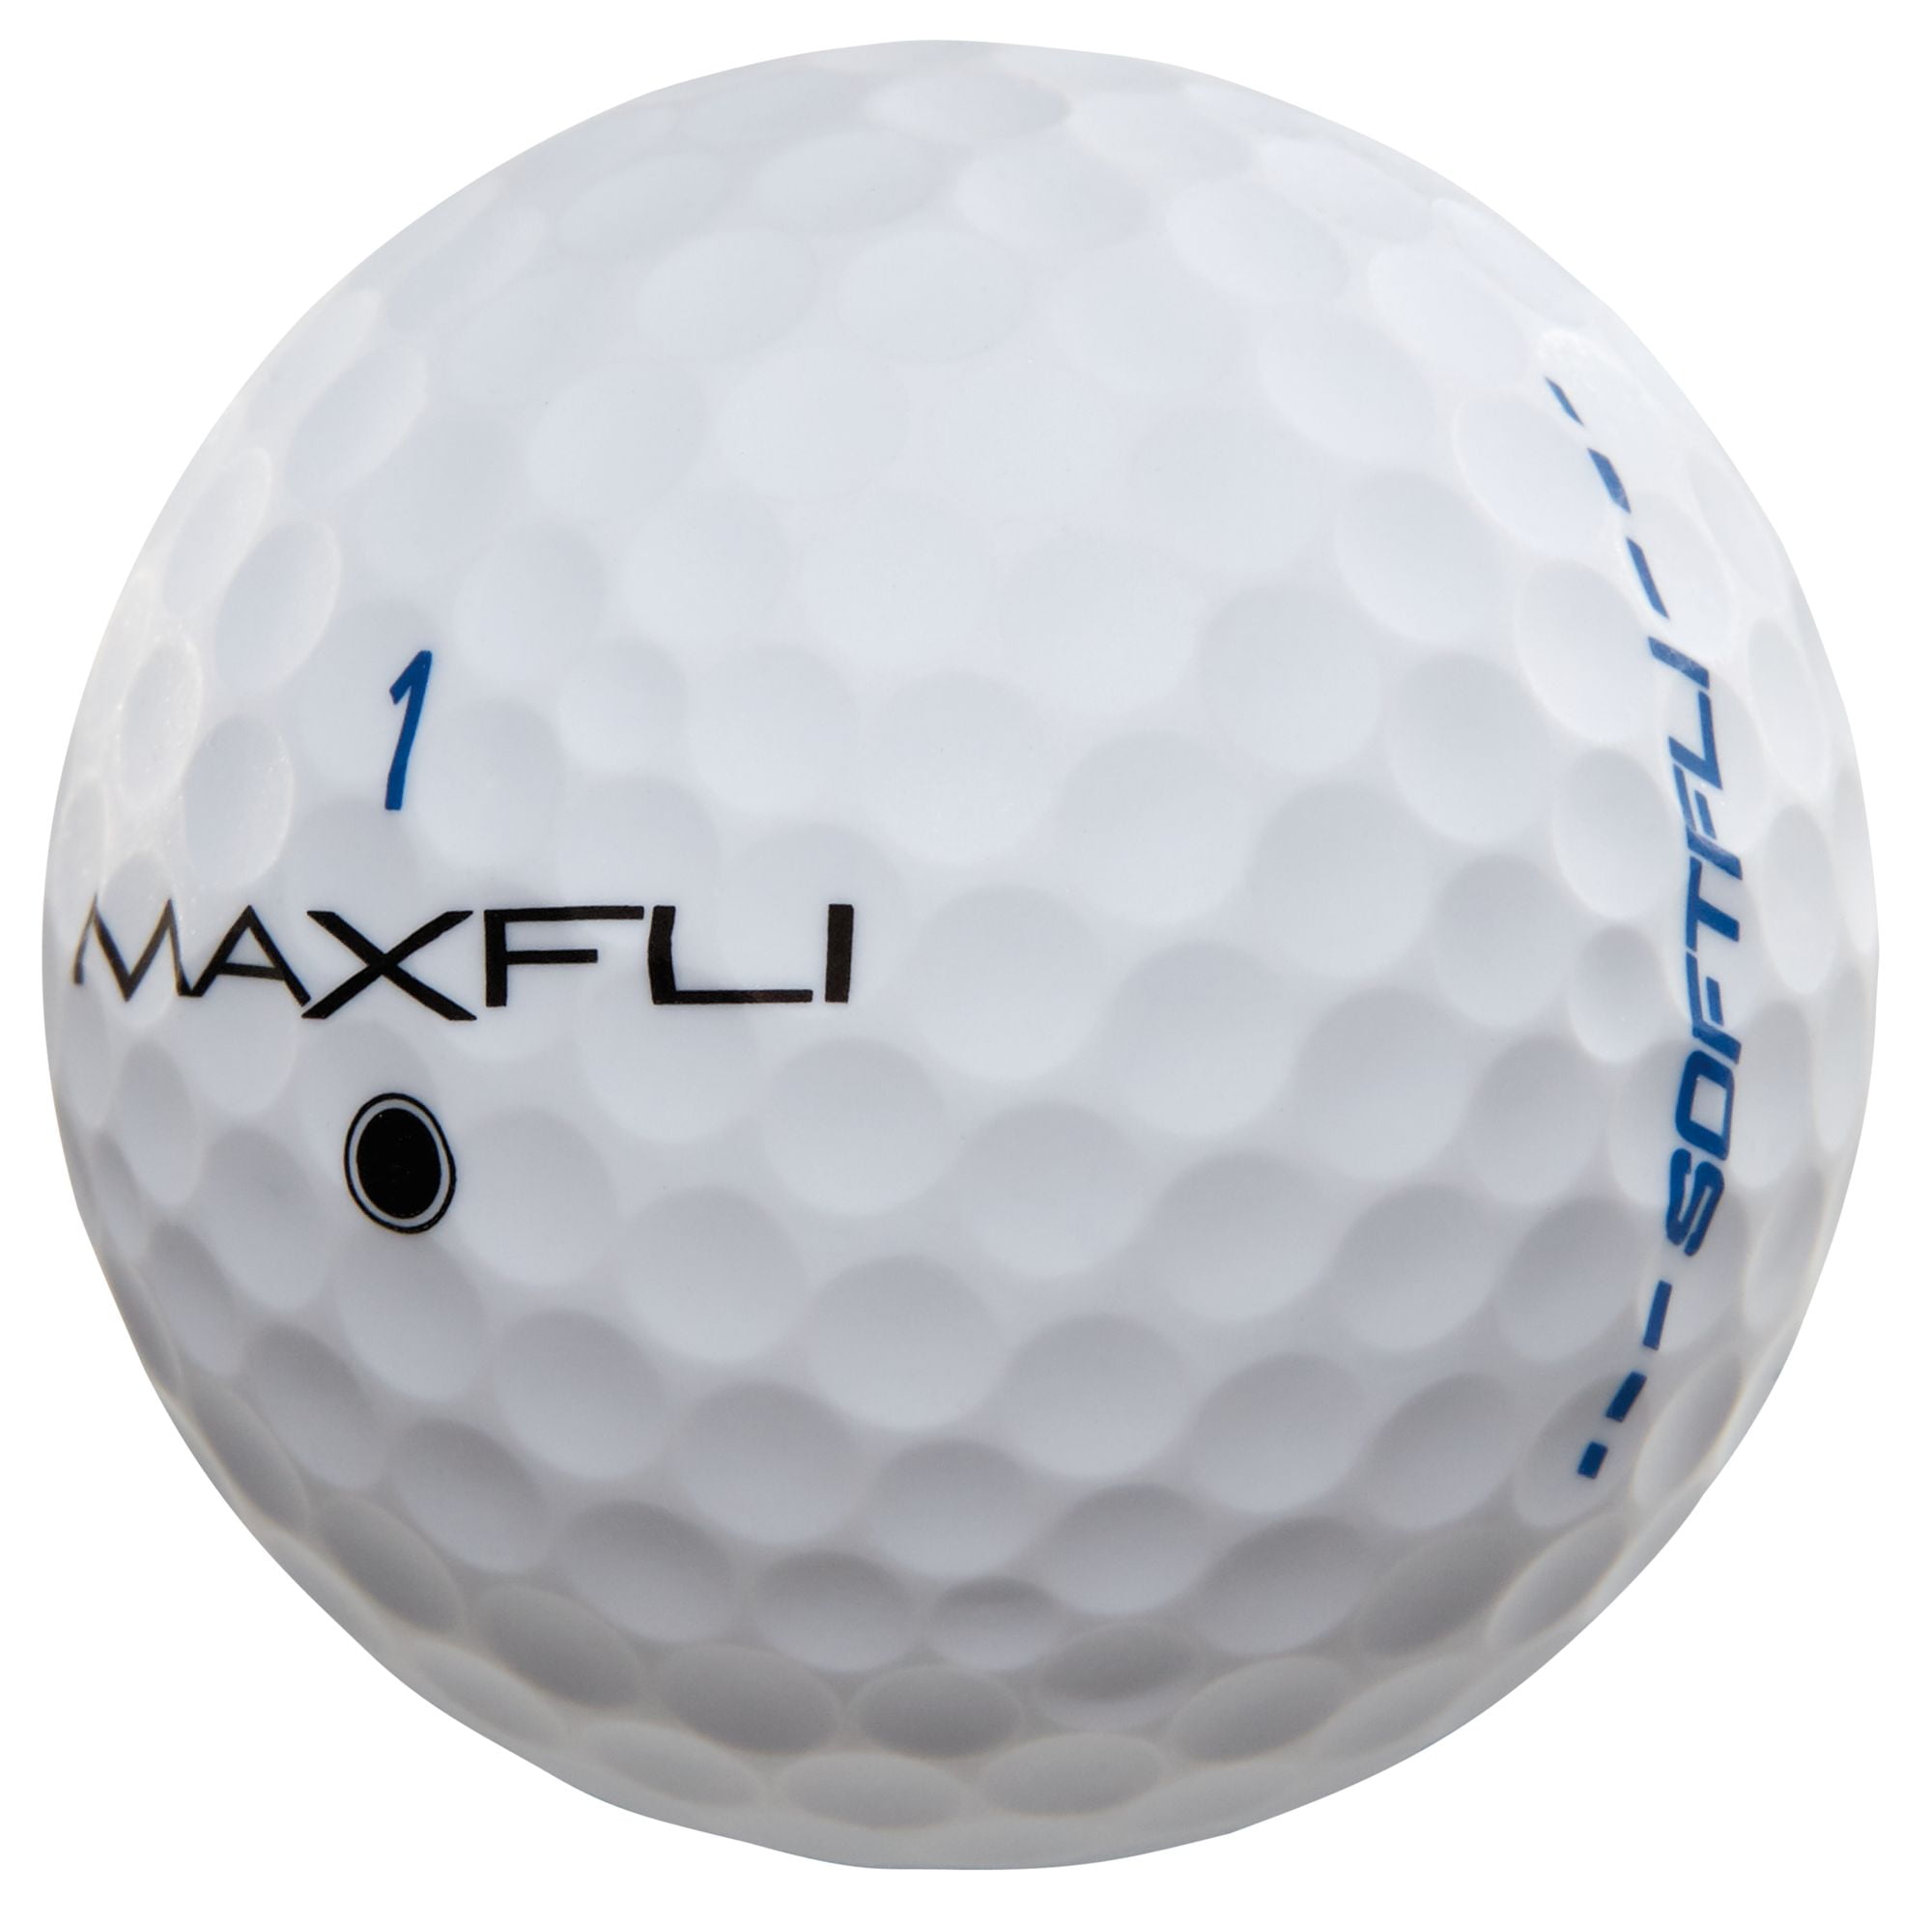 Where to find maxfli tour golf ball discount code?